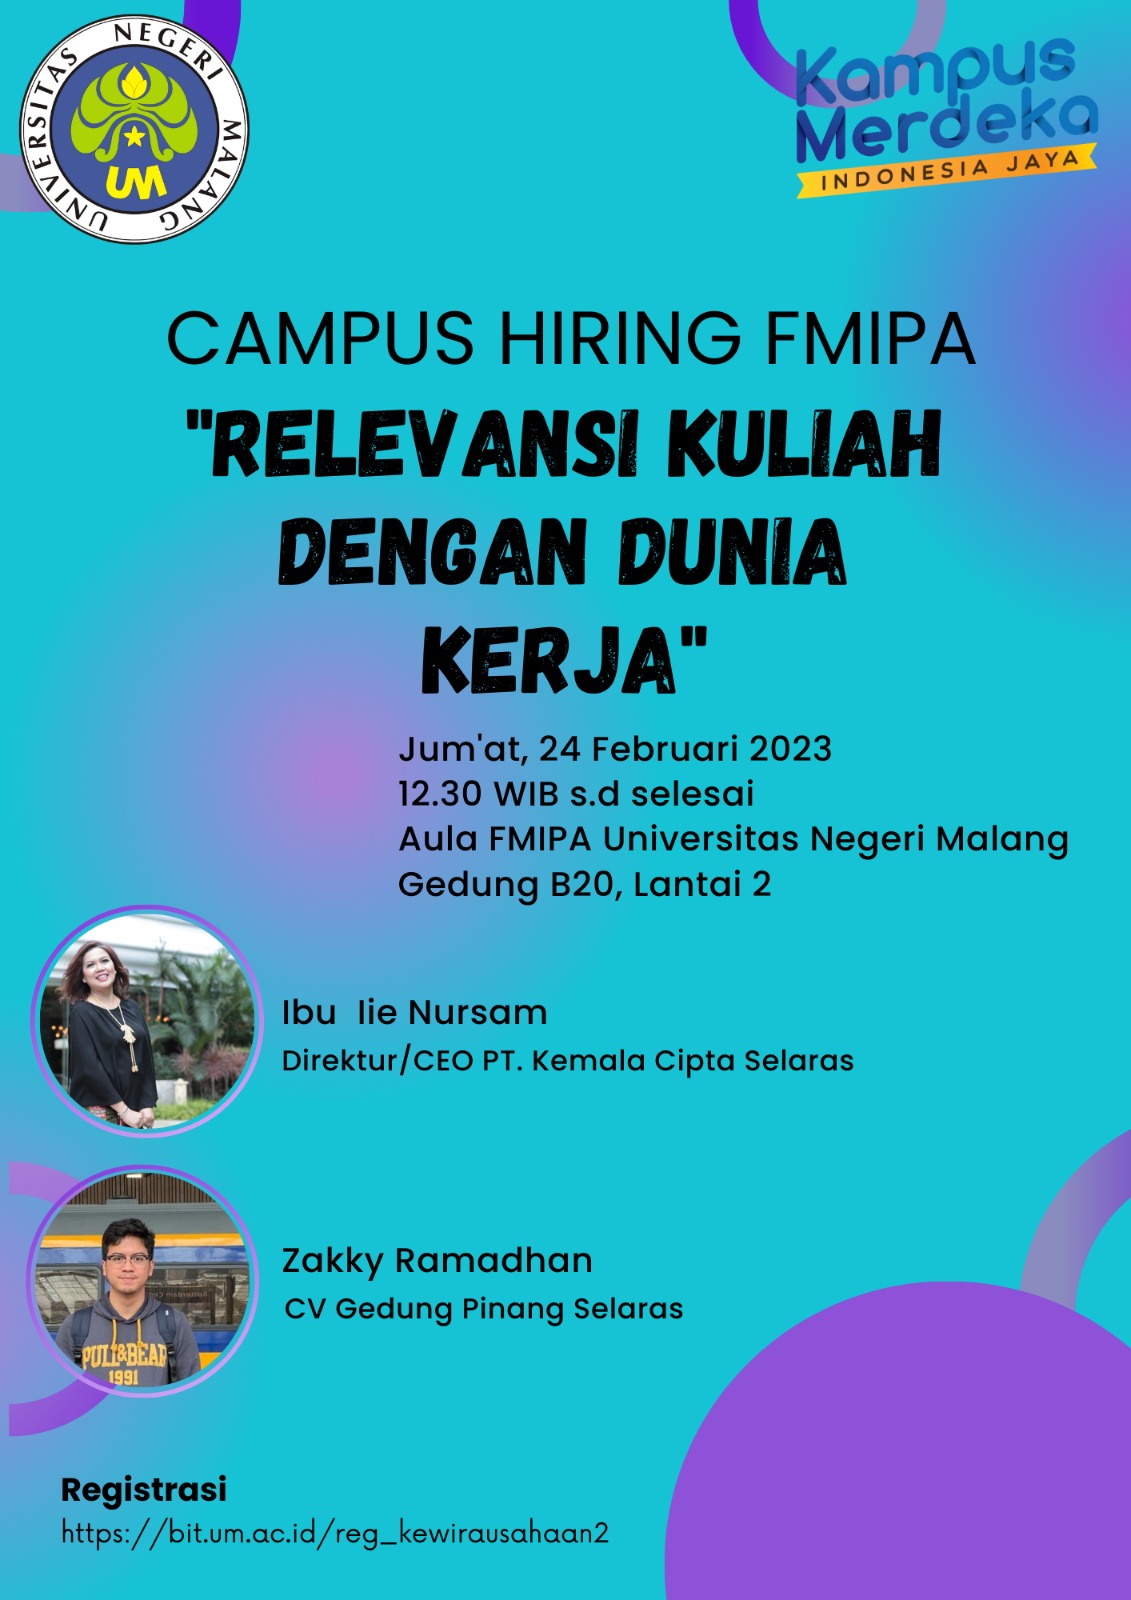 Campus Hiring FMIPA